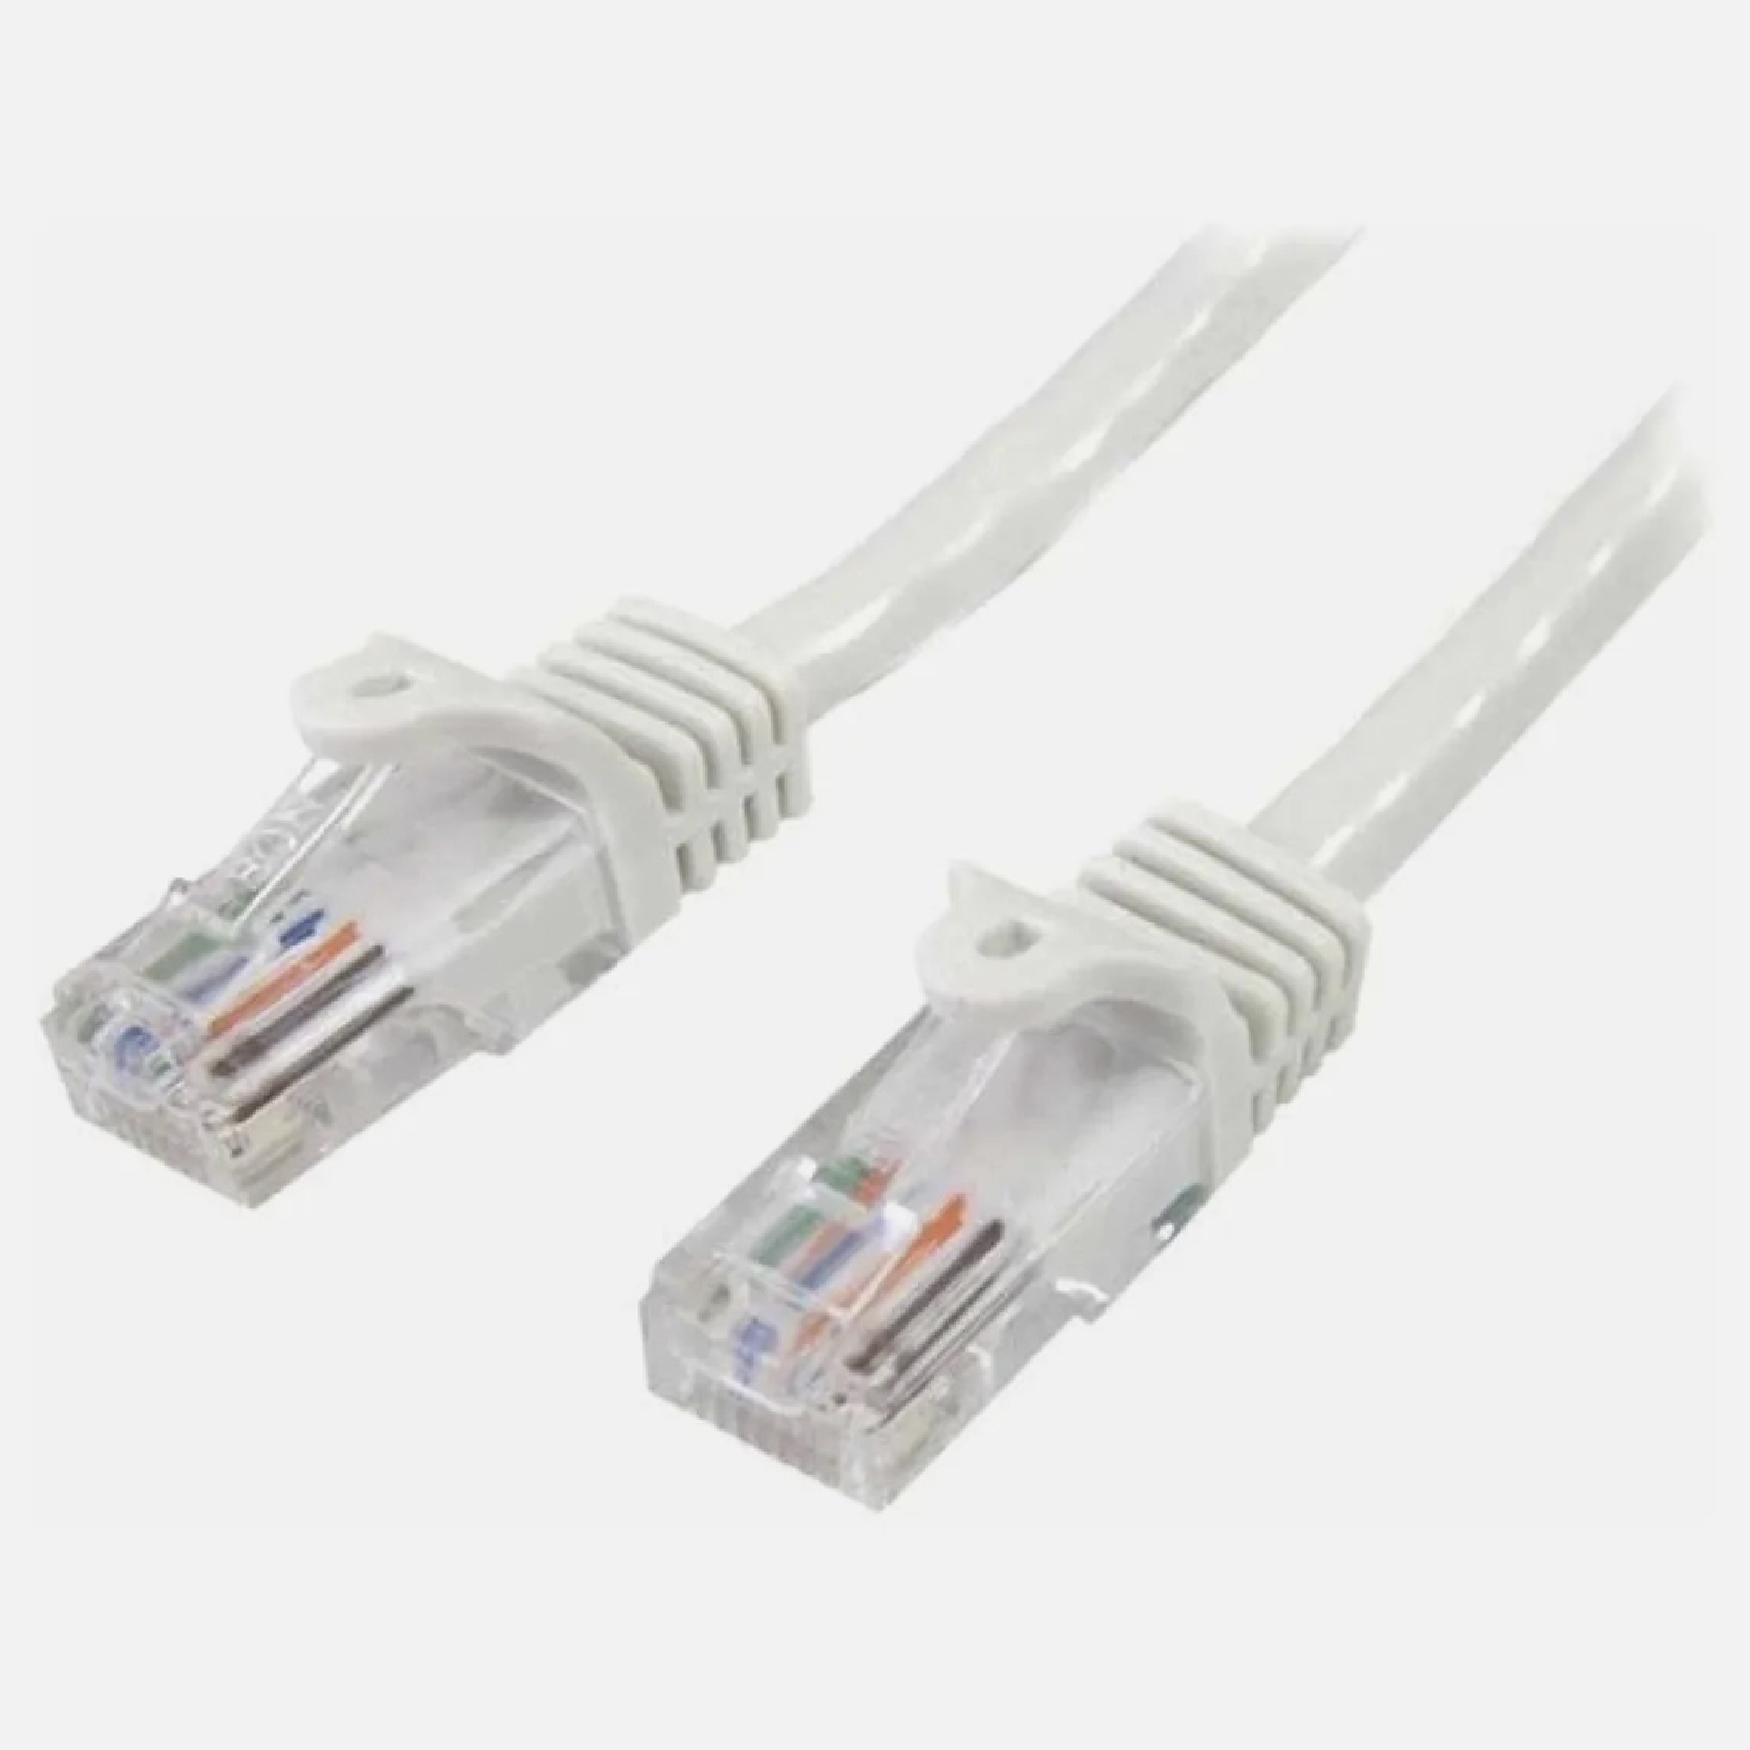 Cable de red lan 1.5MTS – RJ45 CAT 5E – Electro Store